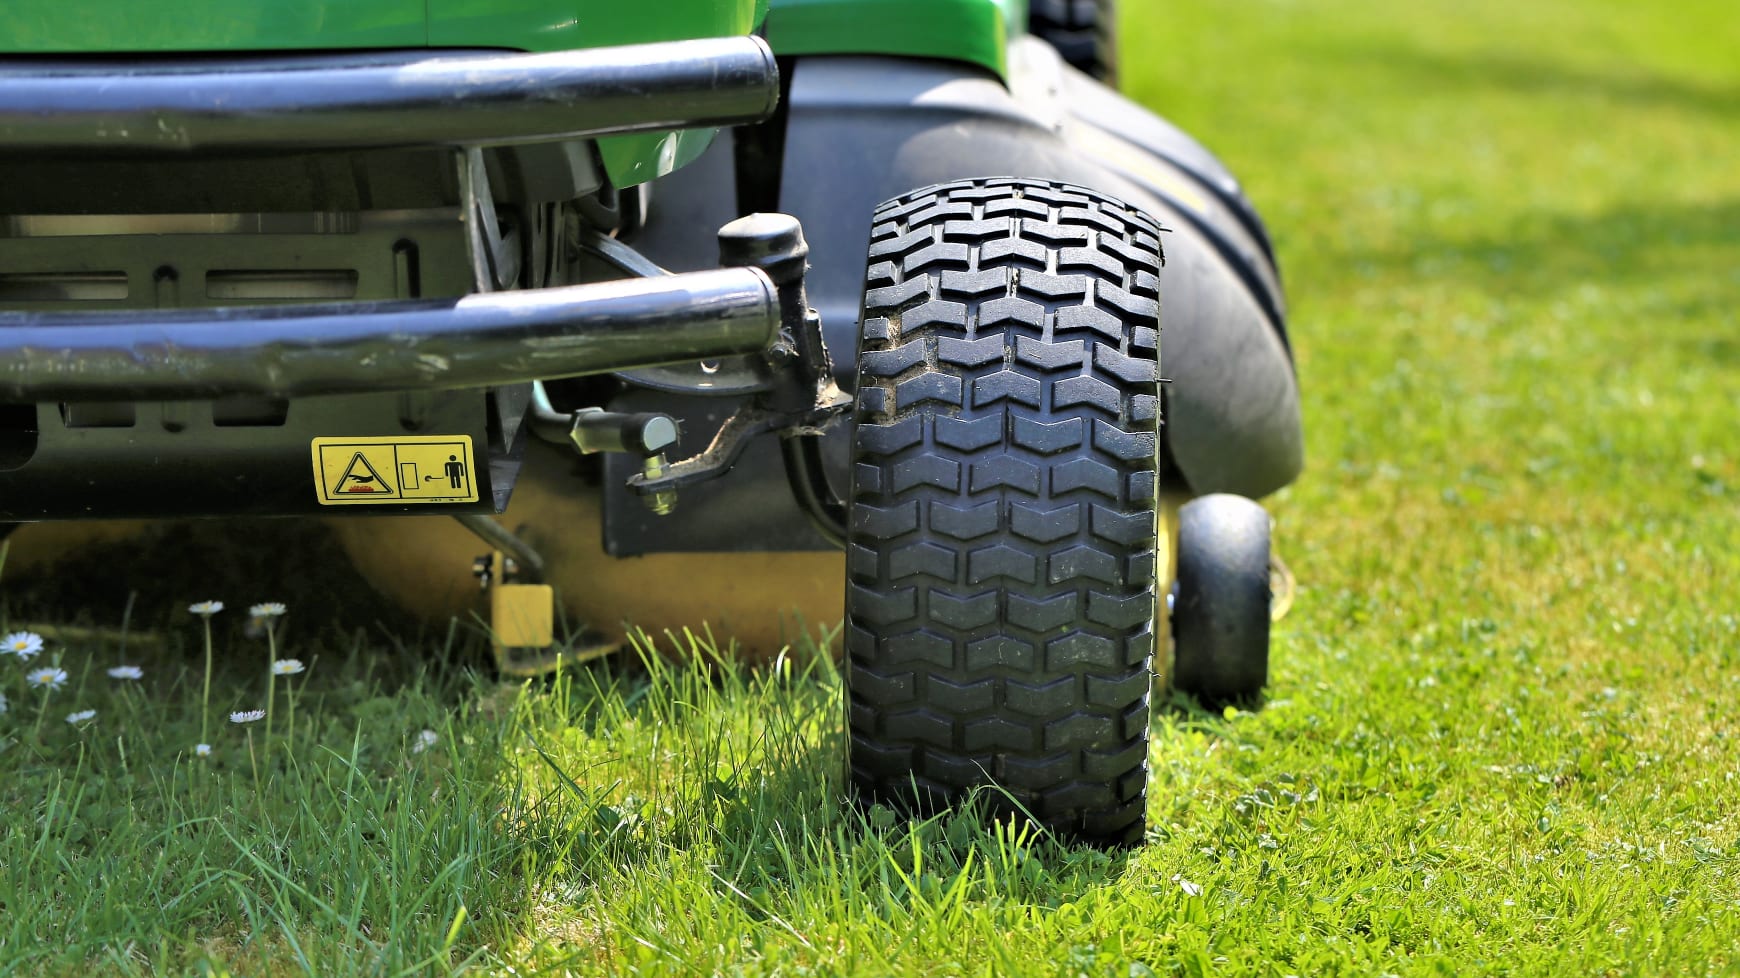 A Lawnmower Cutting Grass